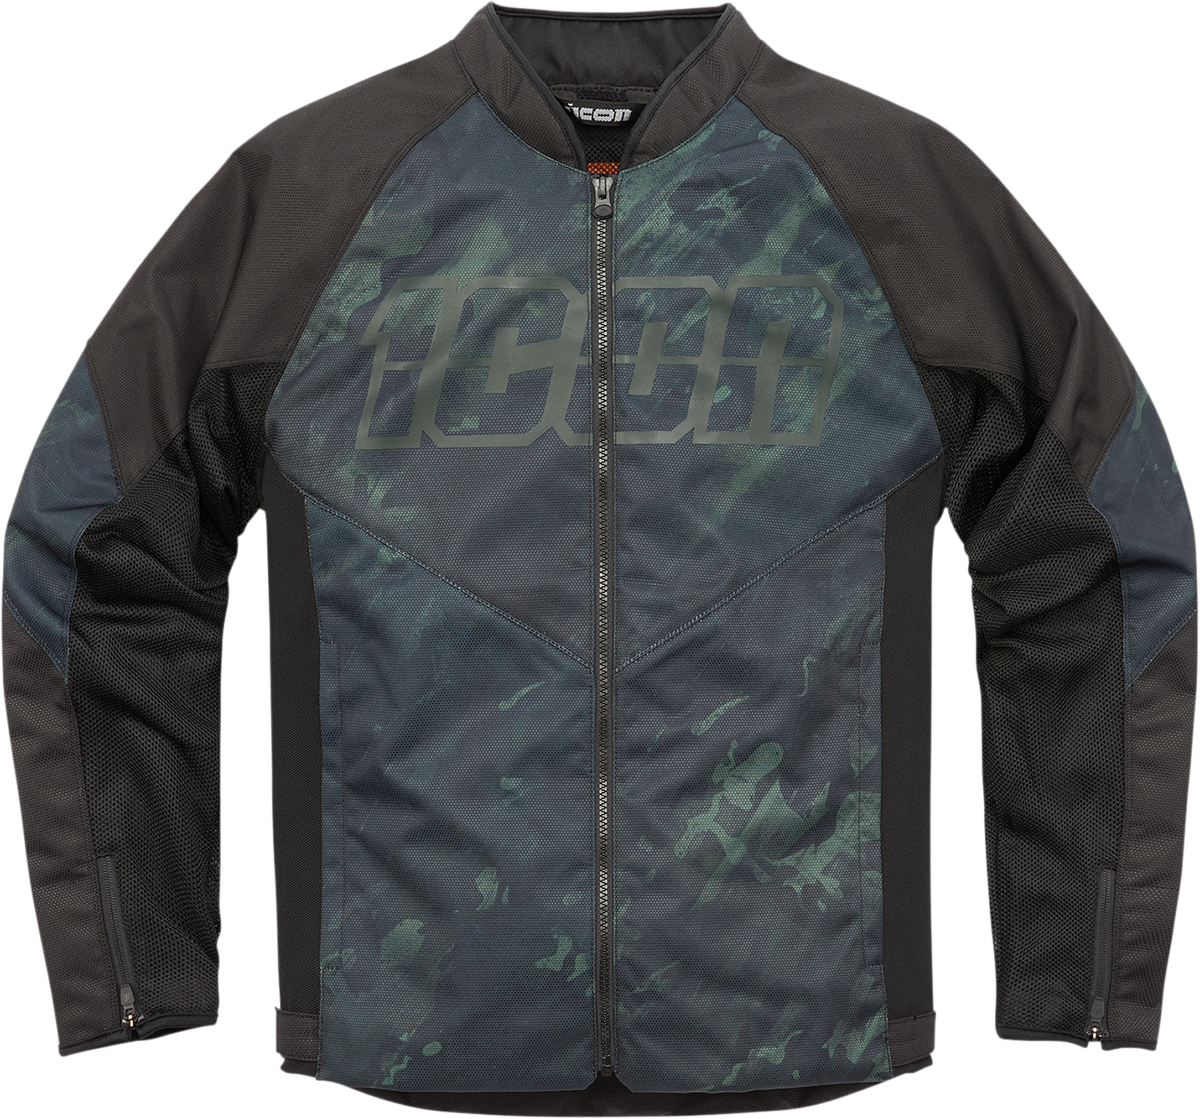 ICON Hooligan Demo™ Jacket - Black - Large 2820-5548